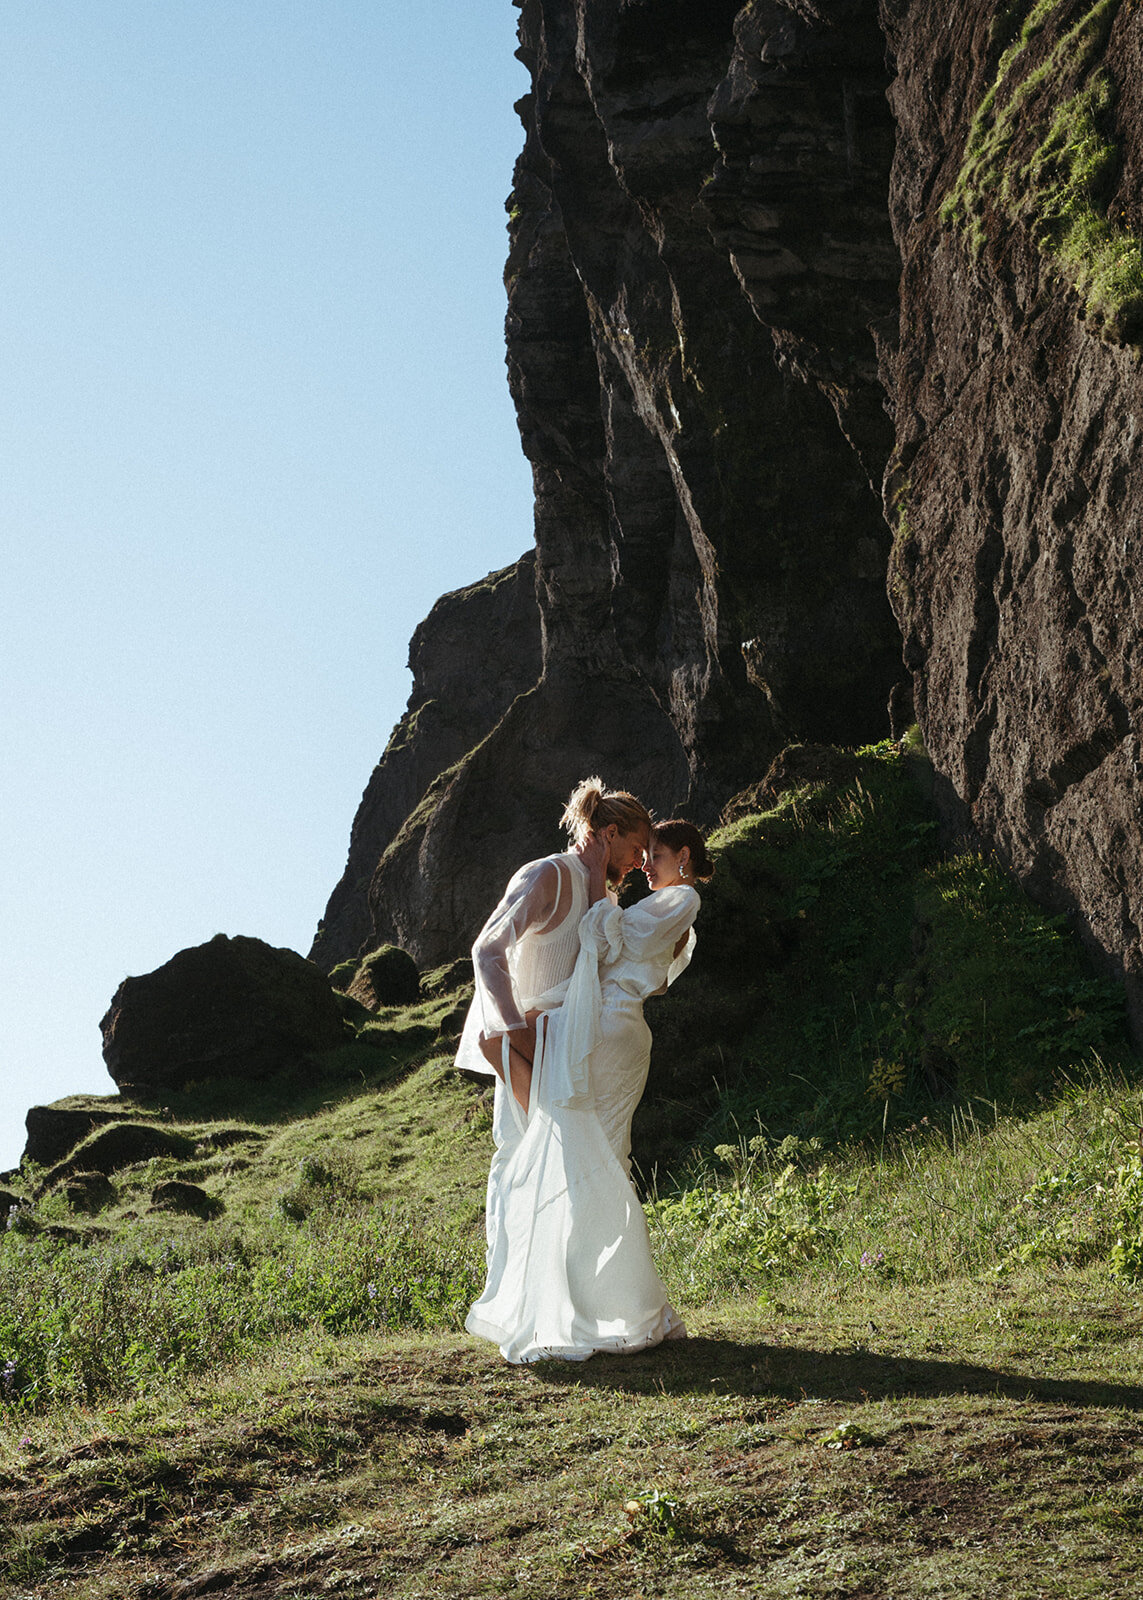 Iceland Cave Elopement Photos | Destination Wedding Photographer16